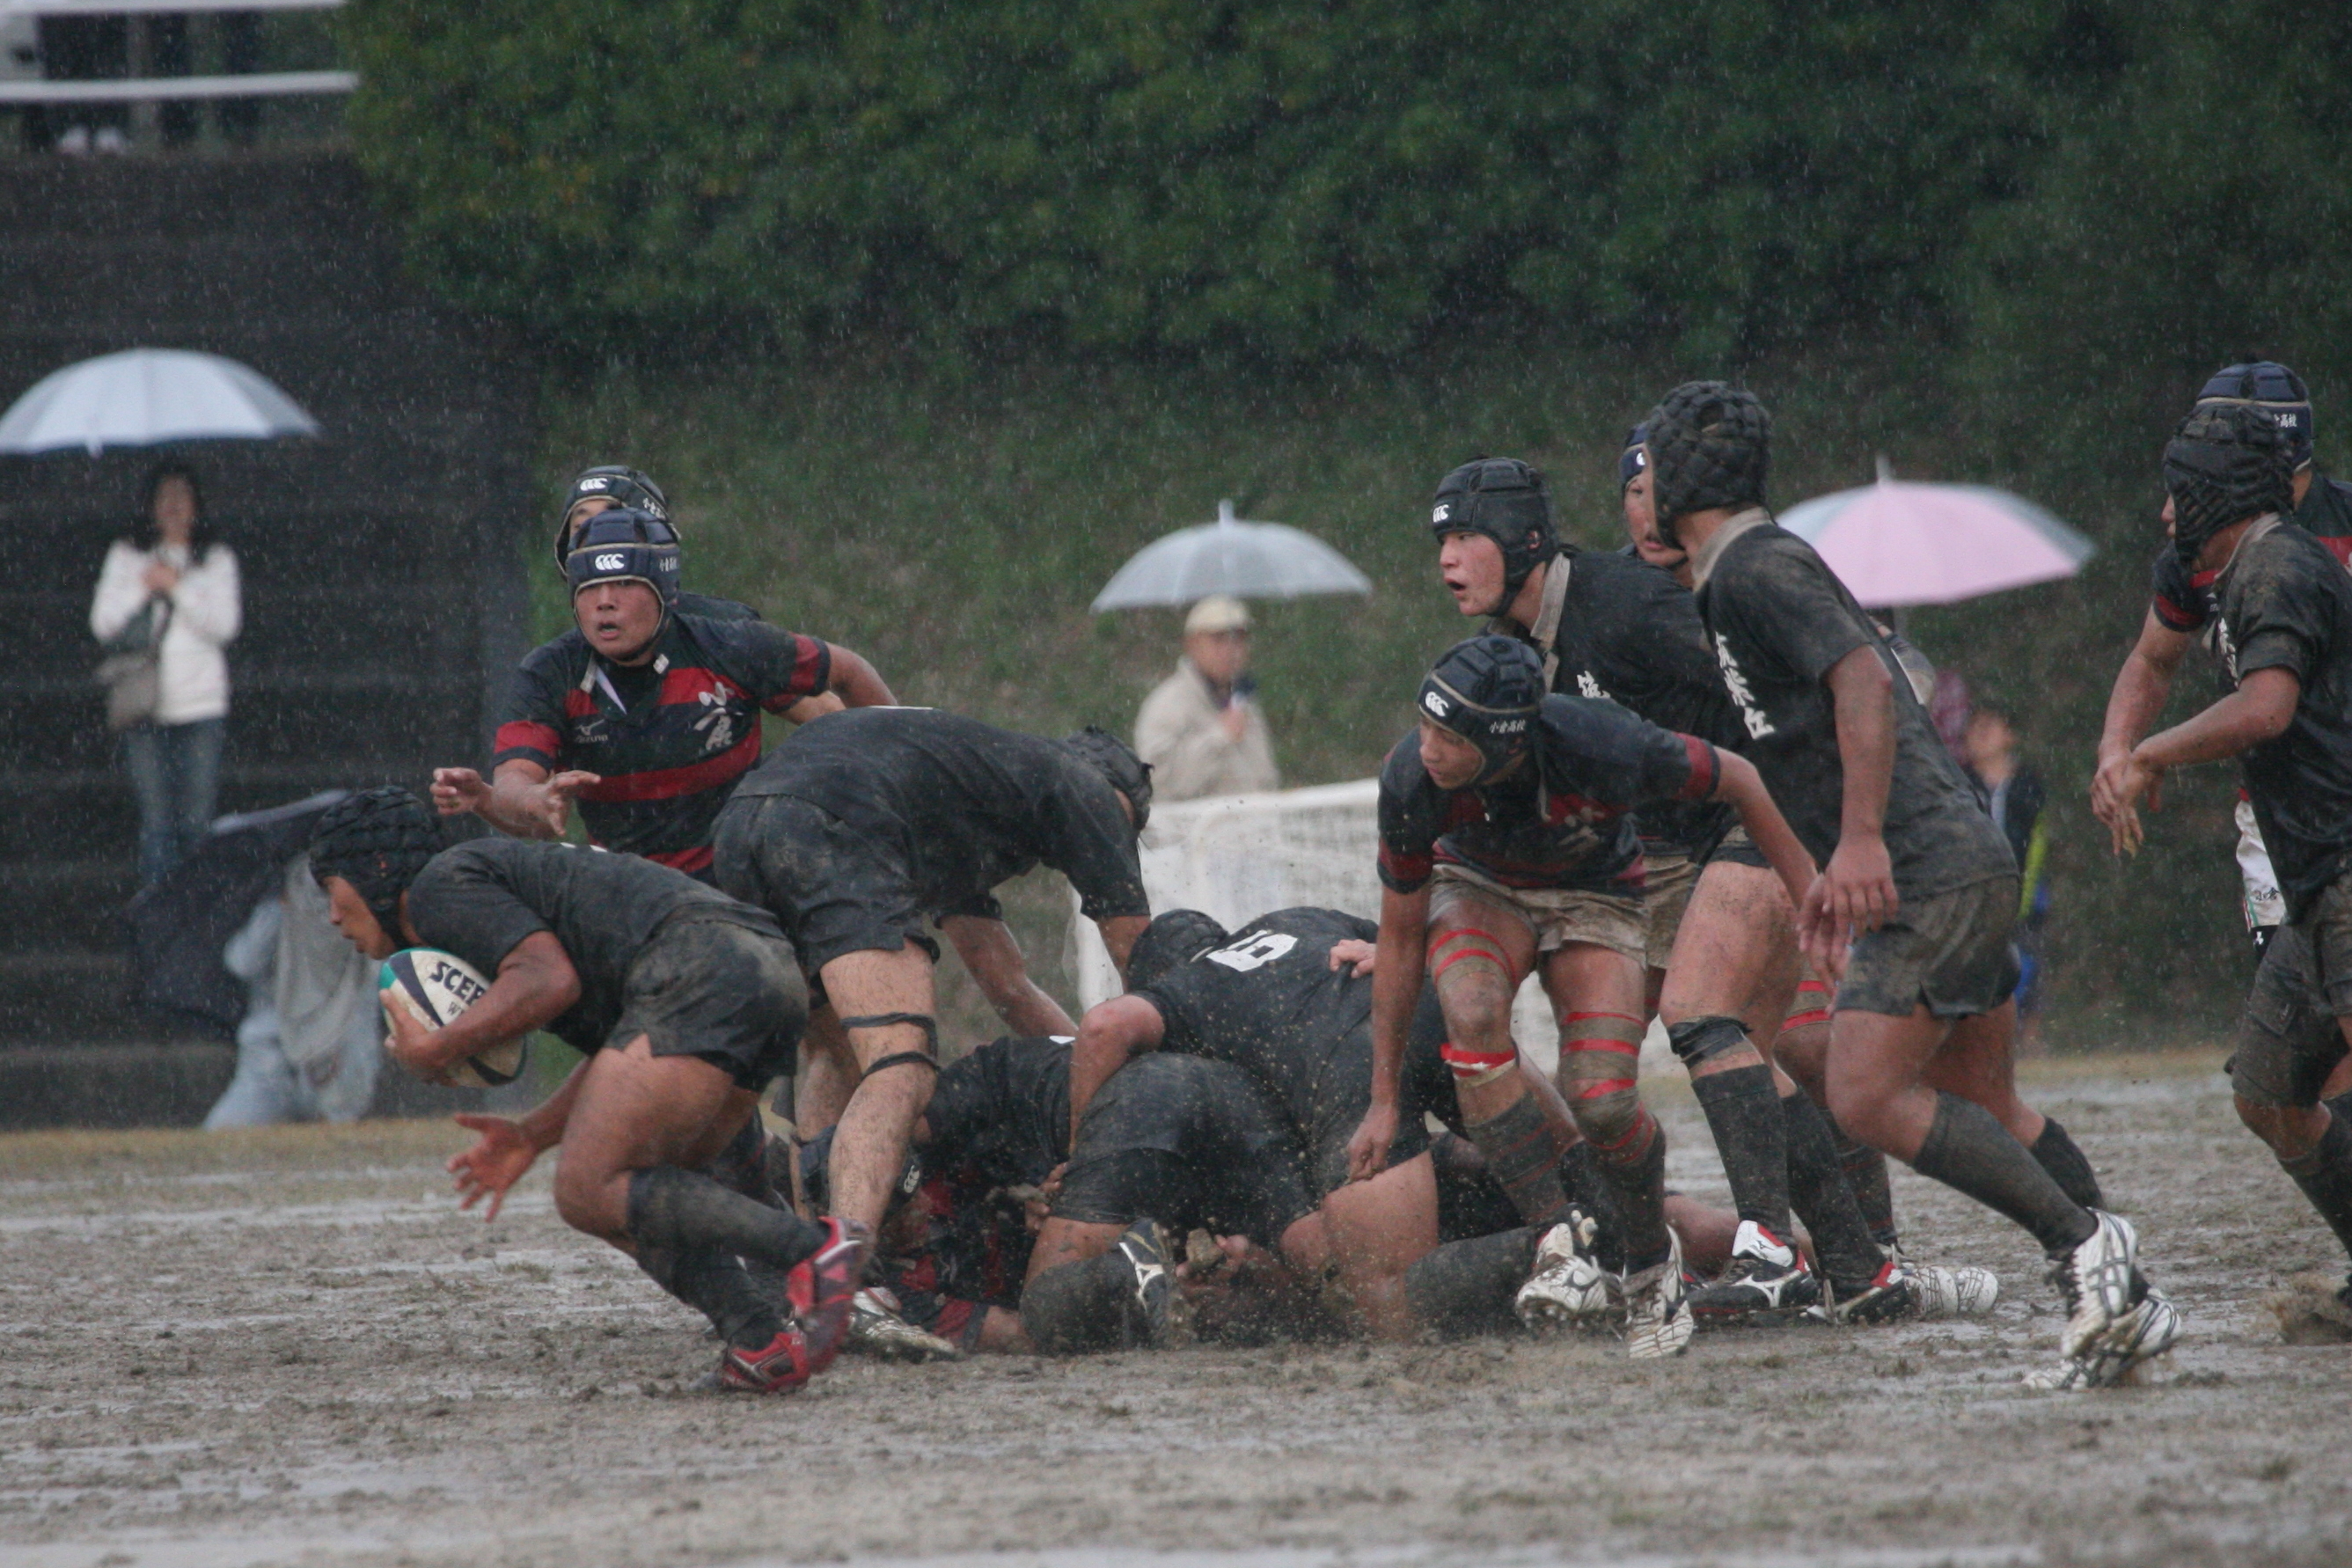 http://kokura-rugby.sakura.ne.jp/2011.10-30-24.JPG